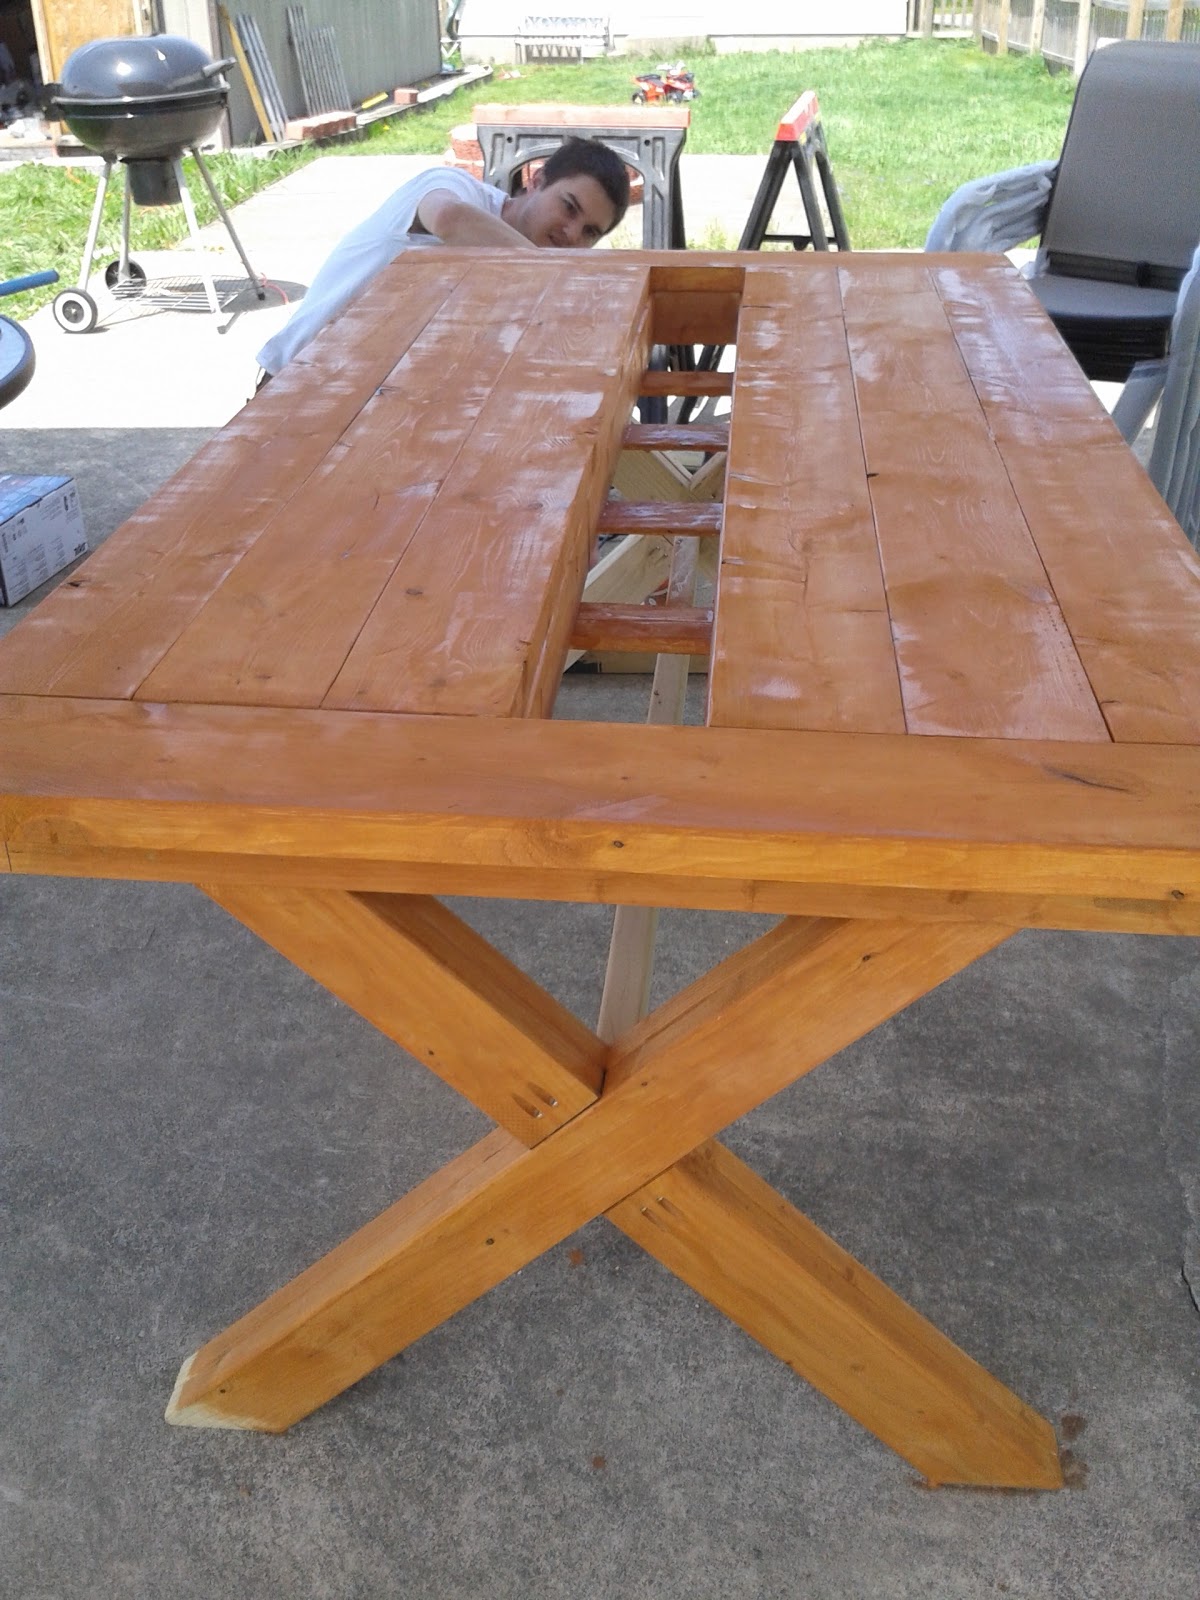 When Life Gives You LemonsMake Crafts: DIY Picnic Table